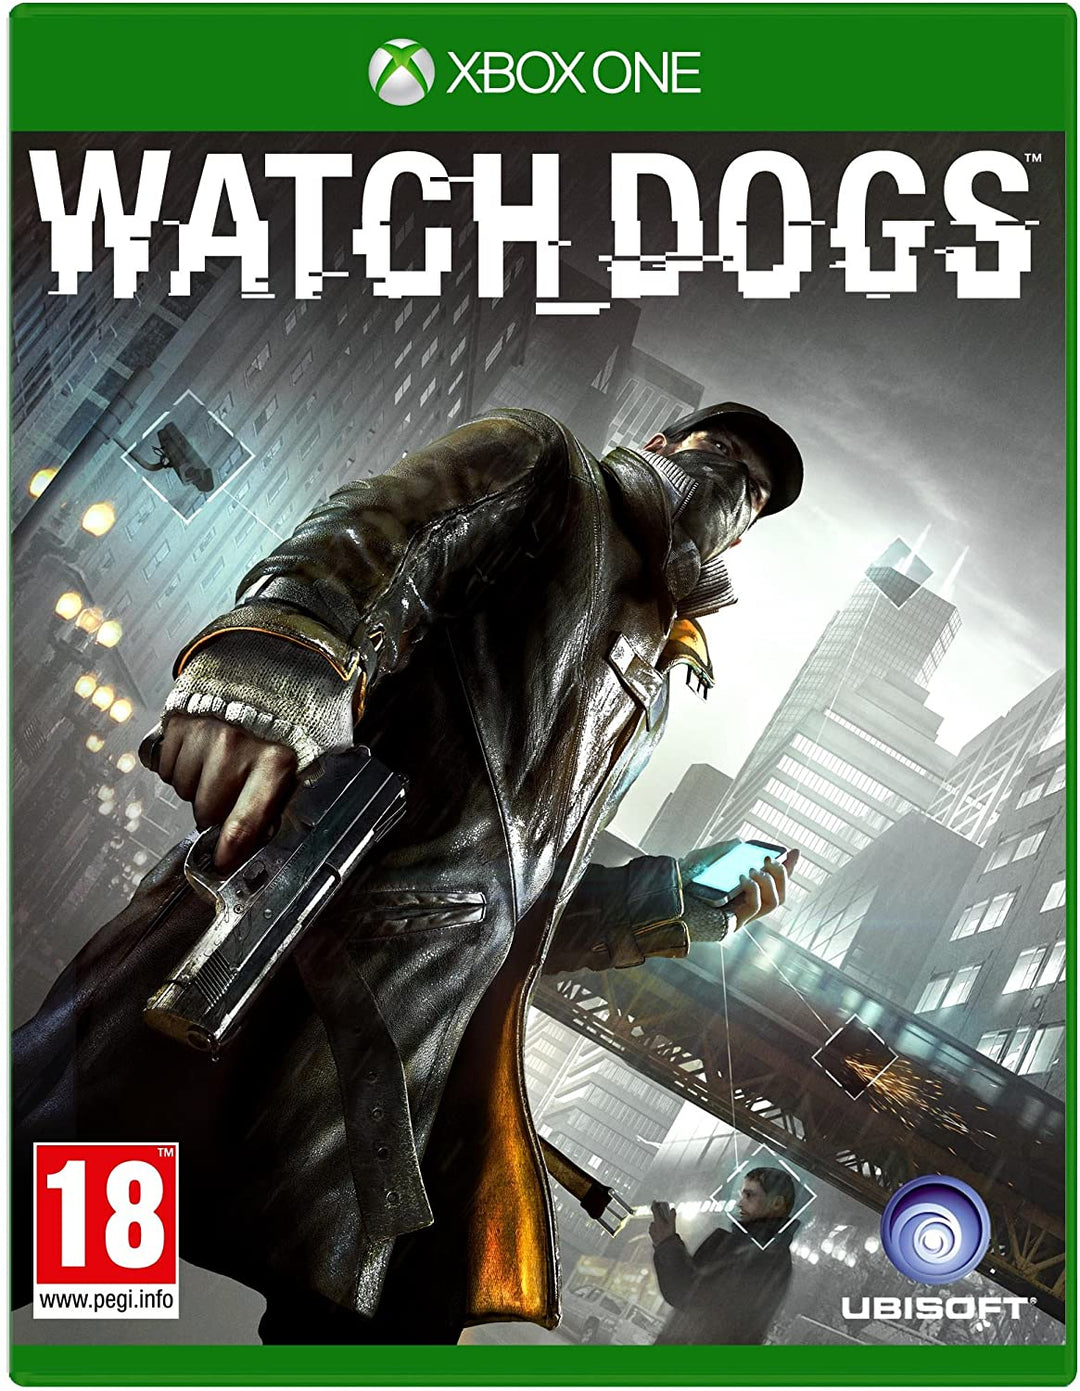 Wachhunde (Xbox One)